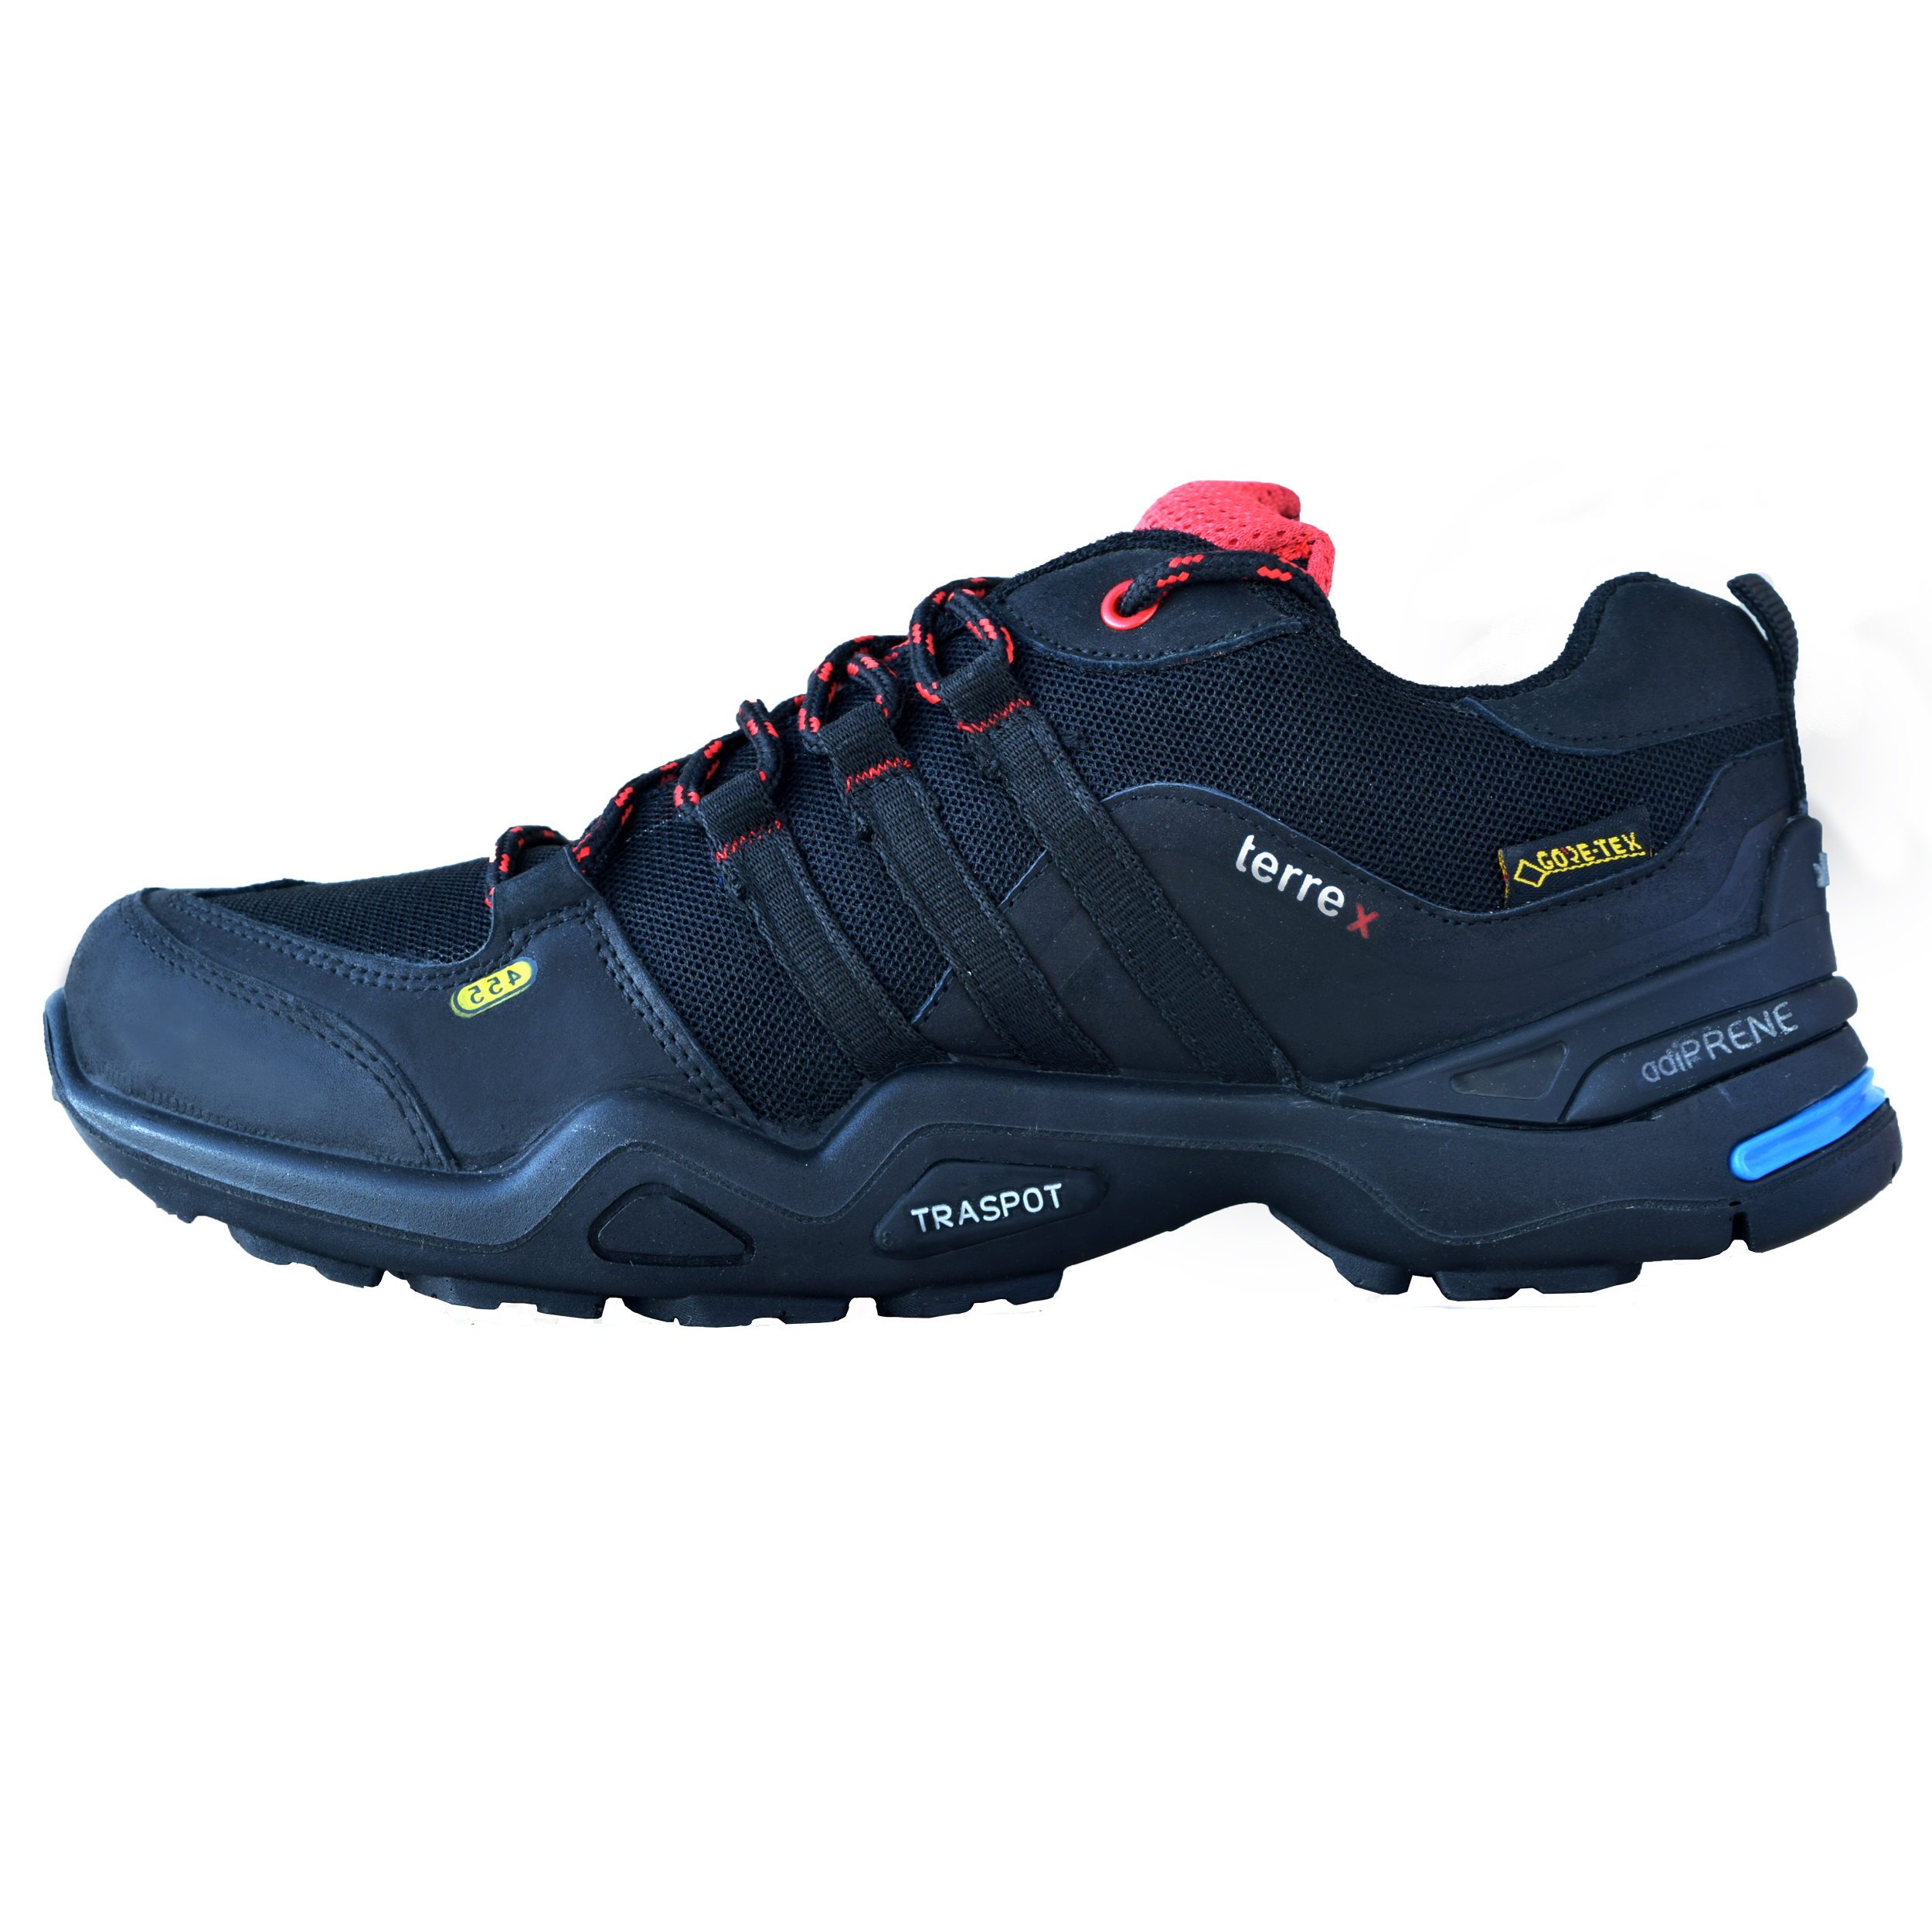 کفش کوهنوردی مردانه کفش آداک مدل ترکس 101 رنگ مشکی